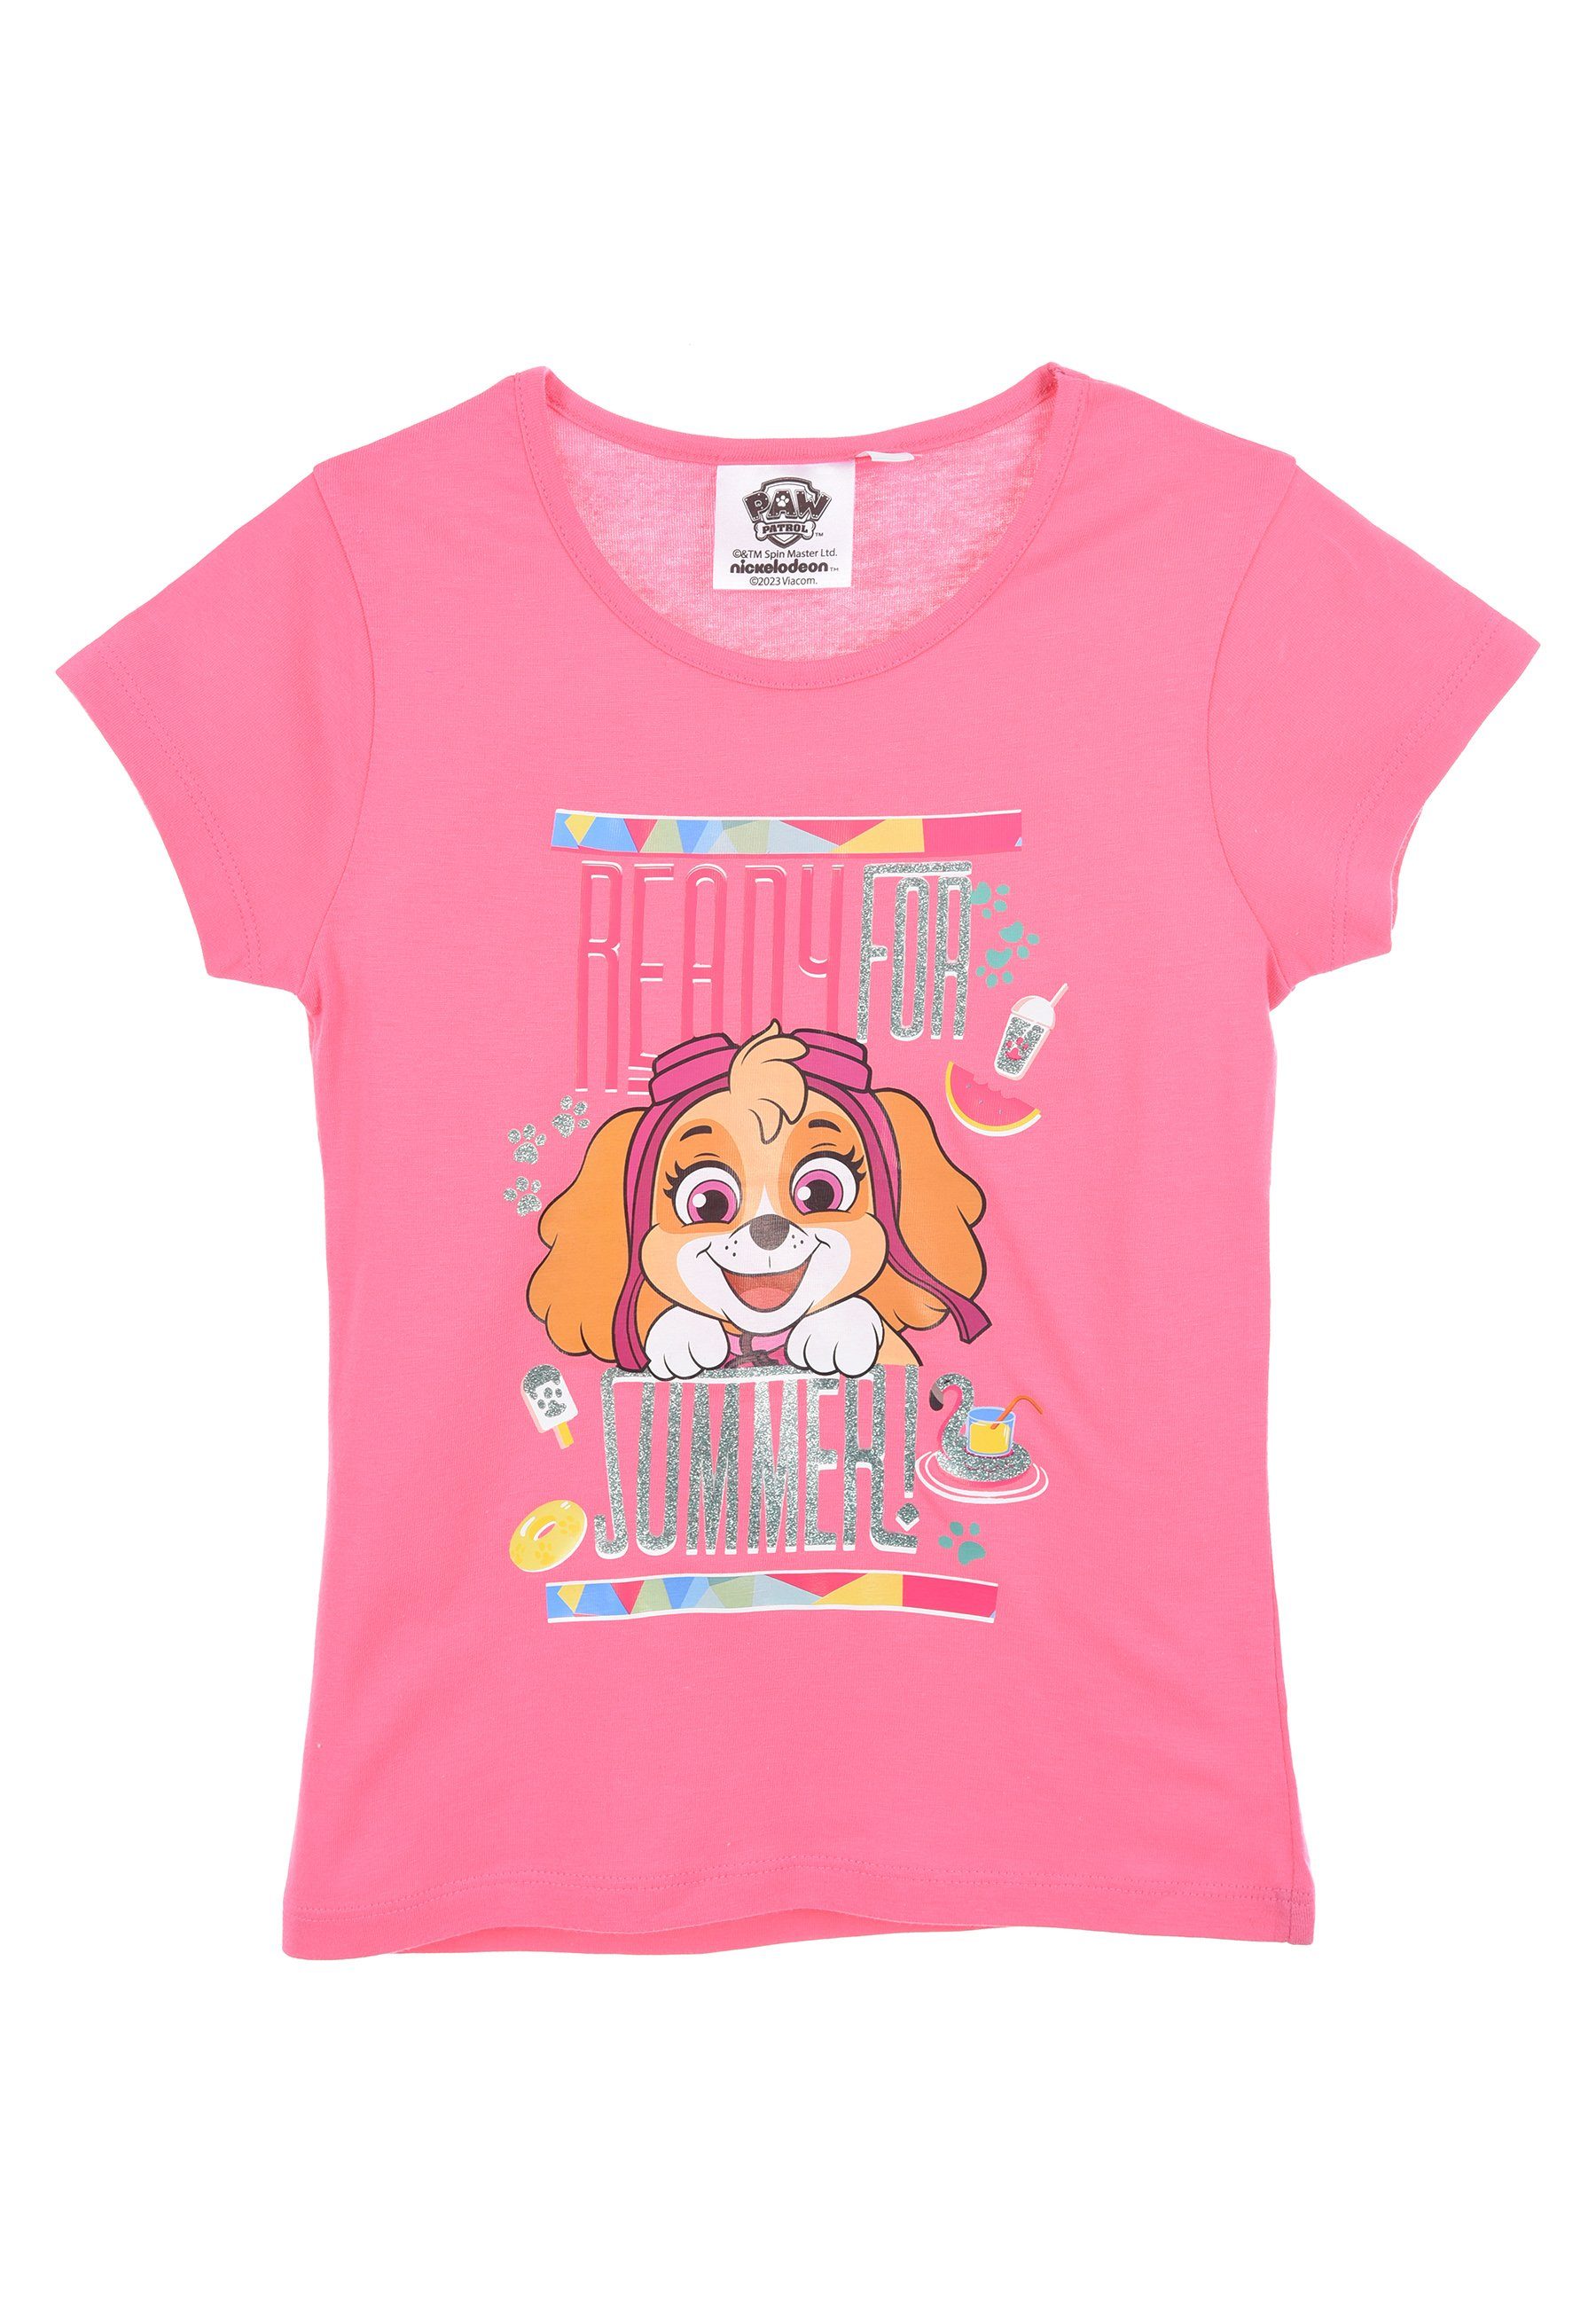 PAW PATROL T-Shirt Mädchen kurzarm Shirt Kinder T-Shirt Pink